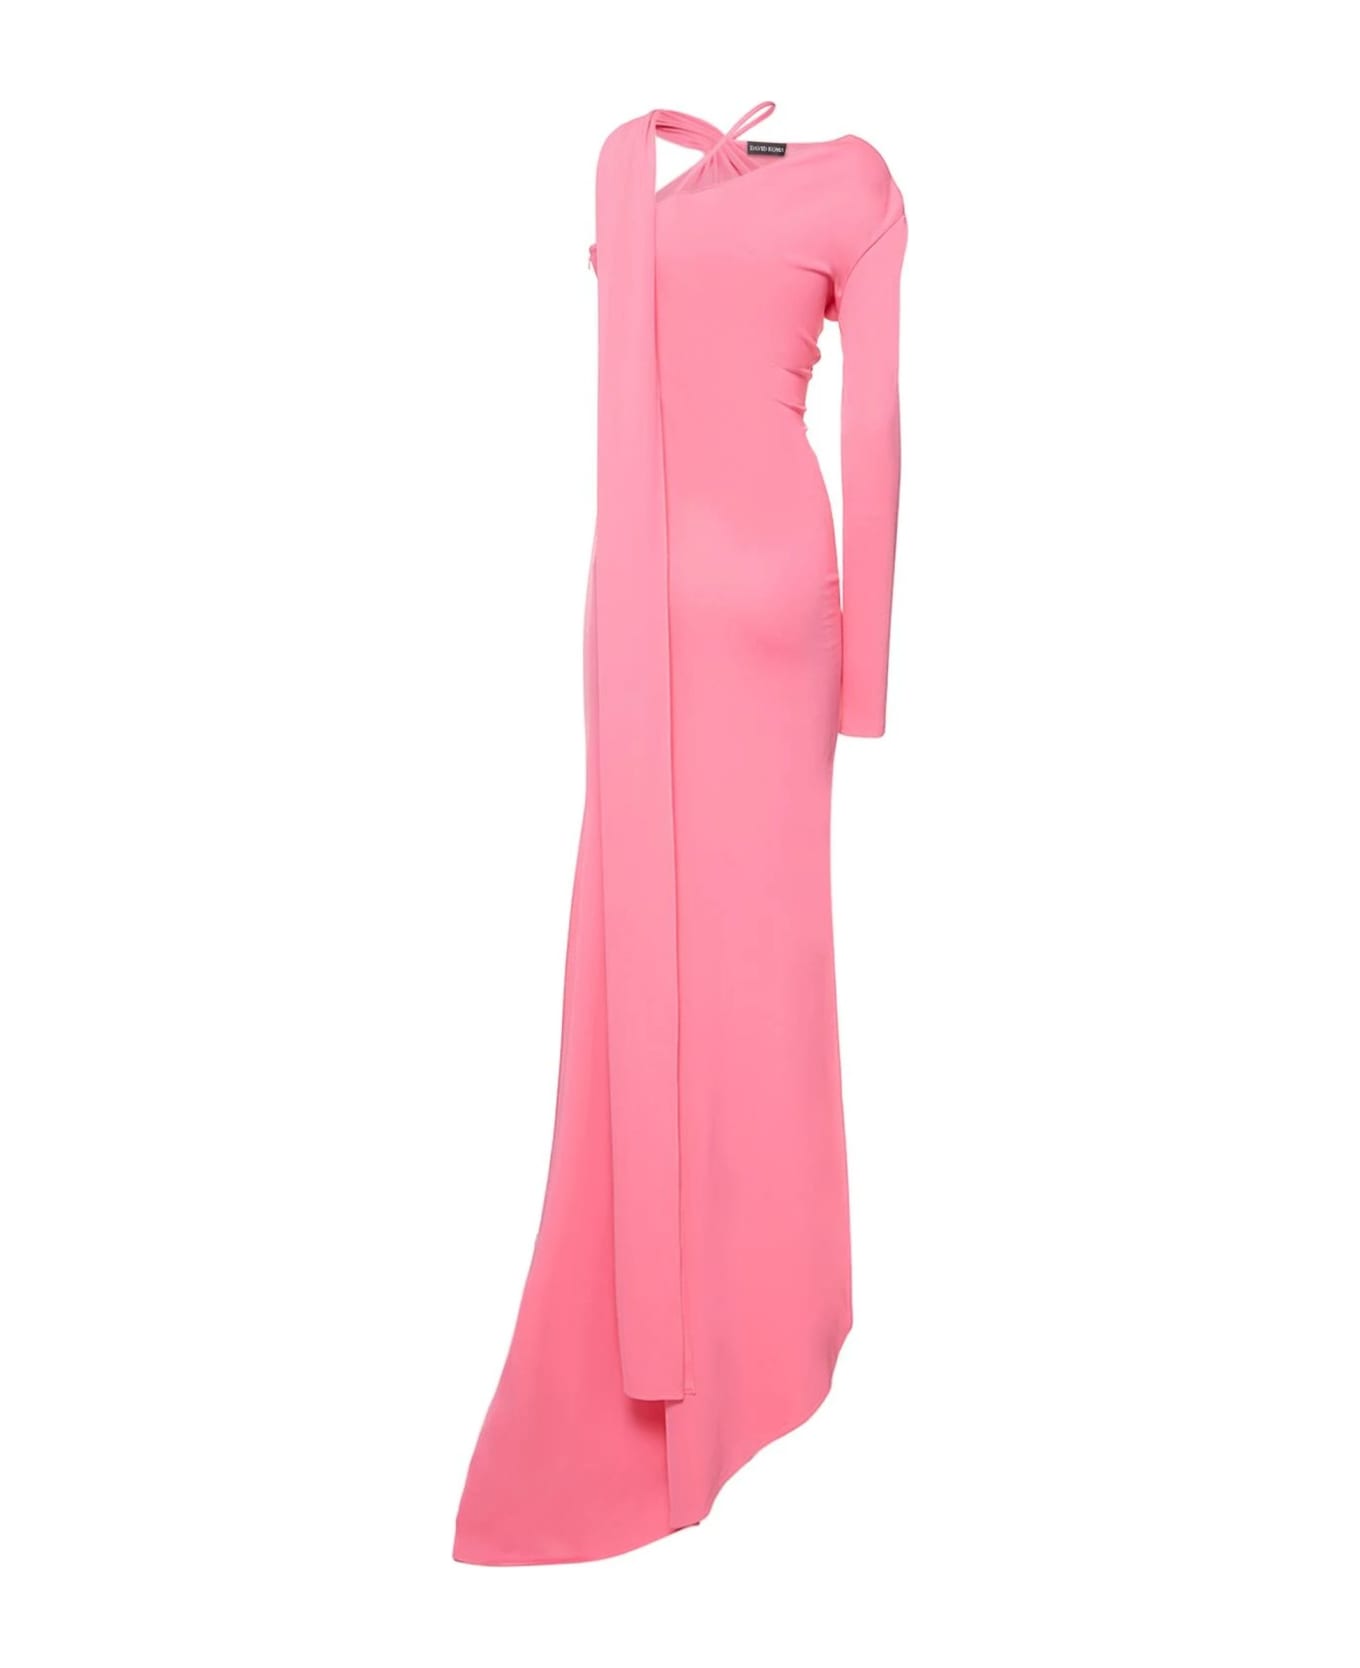 David Koma Dresses Pink - PINK